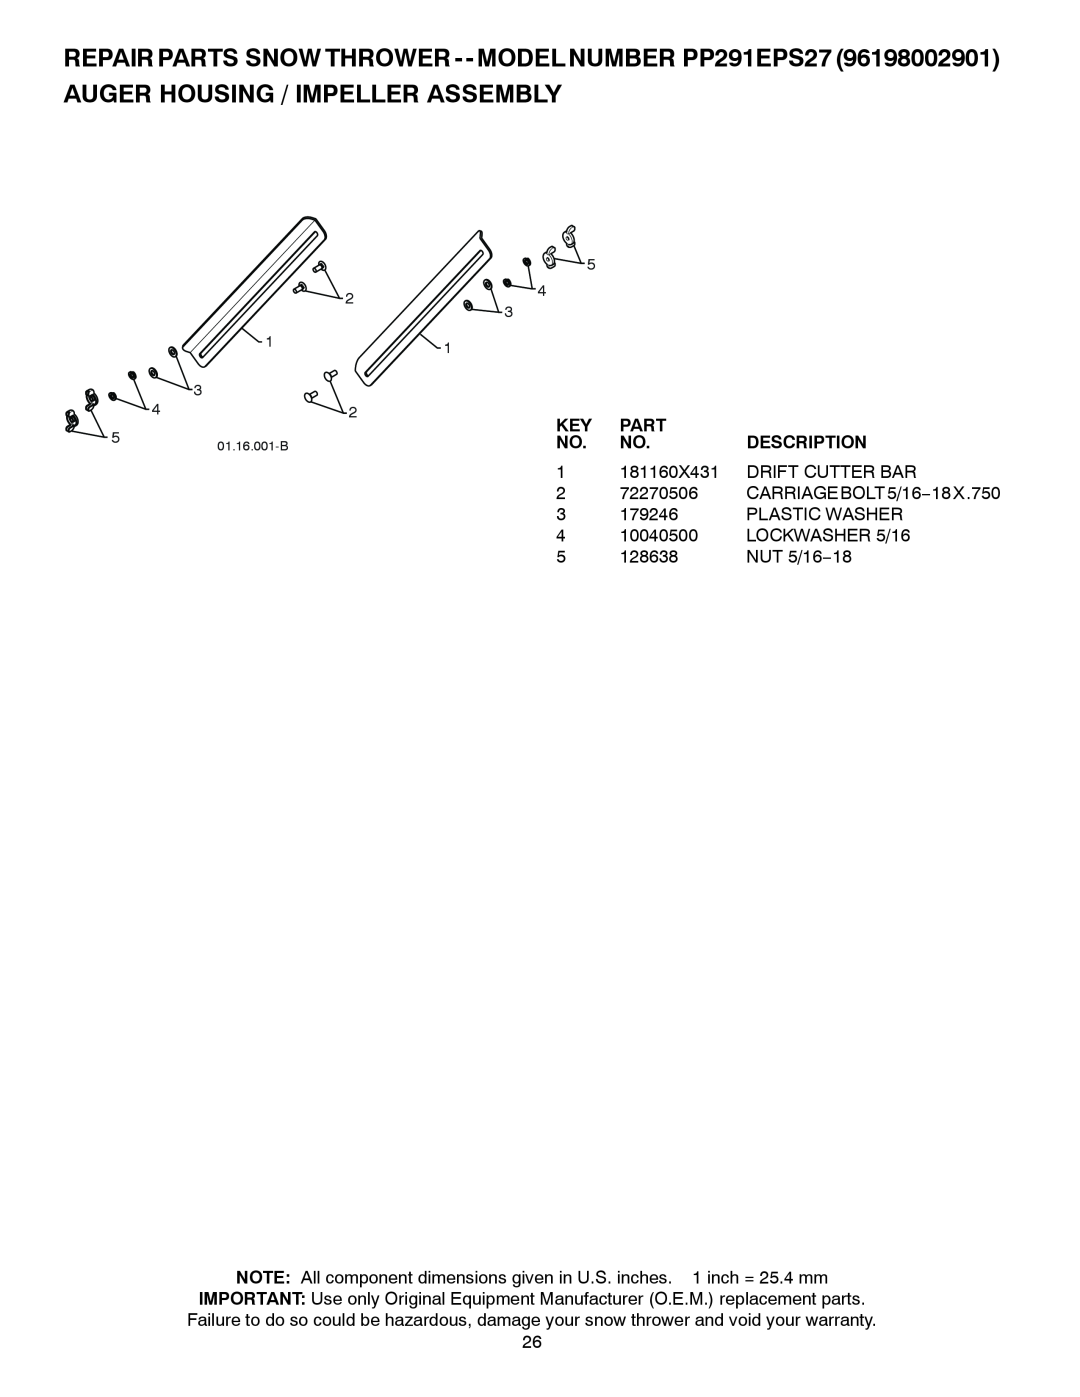 Poulan 435548 REPAIR PARTS SNOW THROWER - - MODEL NUMBER PP291EPS27, Auger Housing / Impeller Assembly, Part, Description 